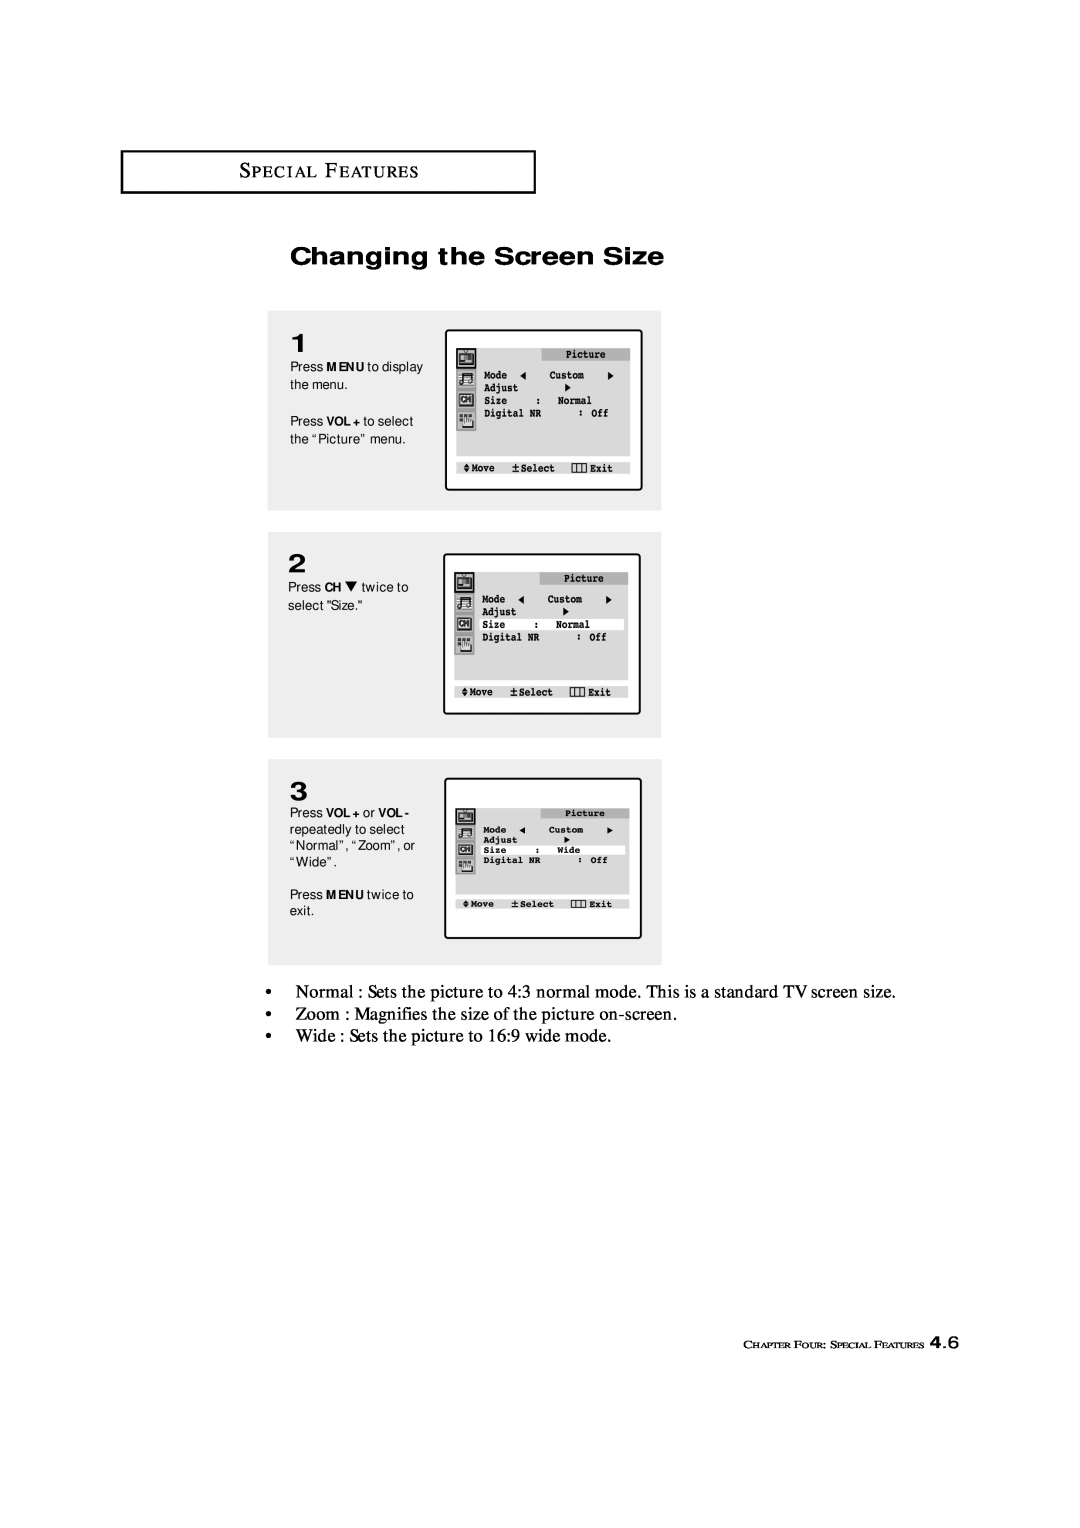 Samsung TXL 3676, TXL 3276 manual Changing the Screen Size, Press MENU to display the menu, Press CH twice to select Size 